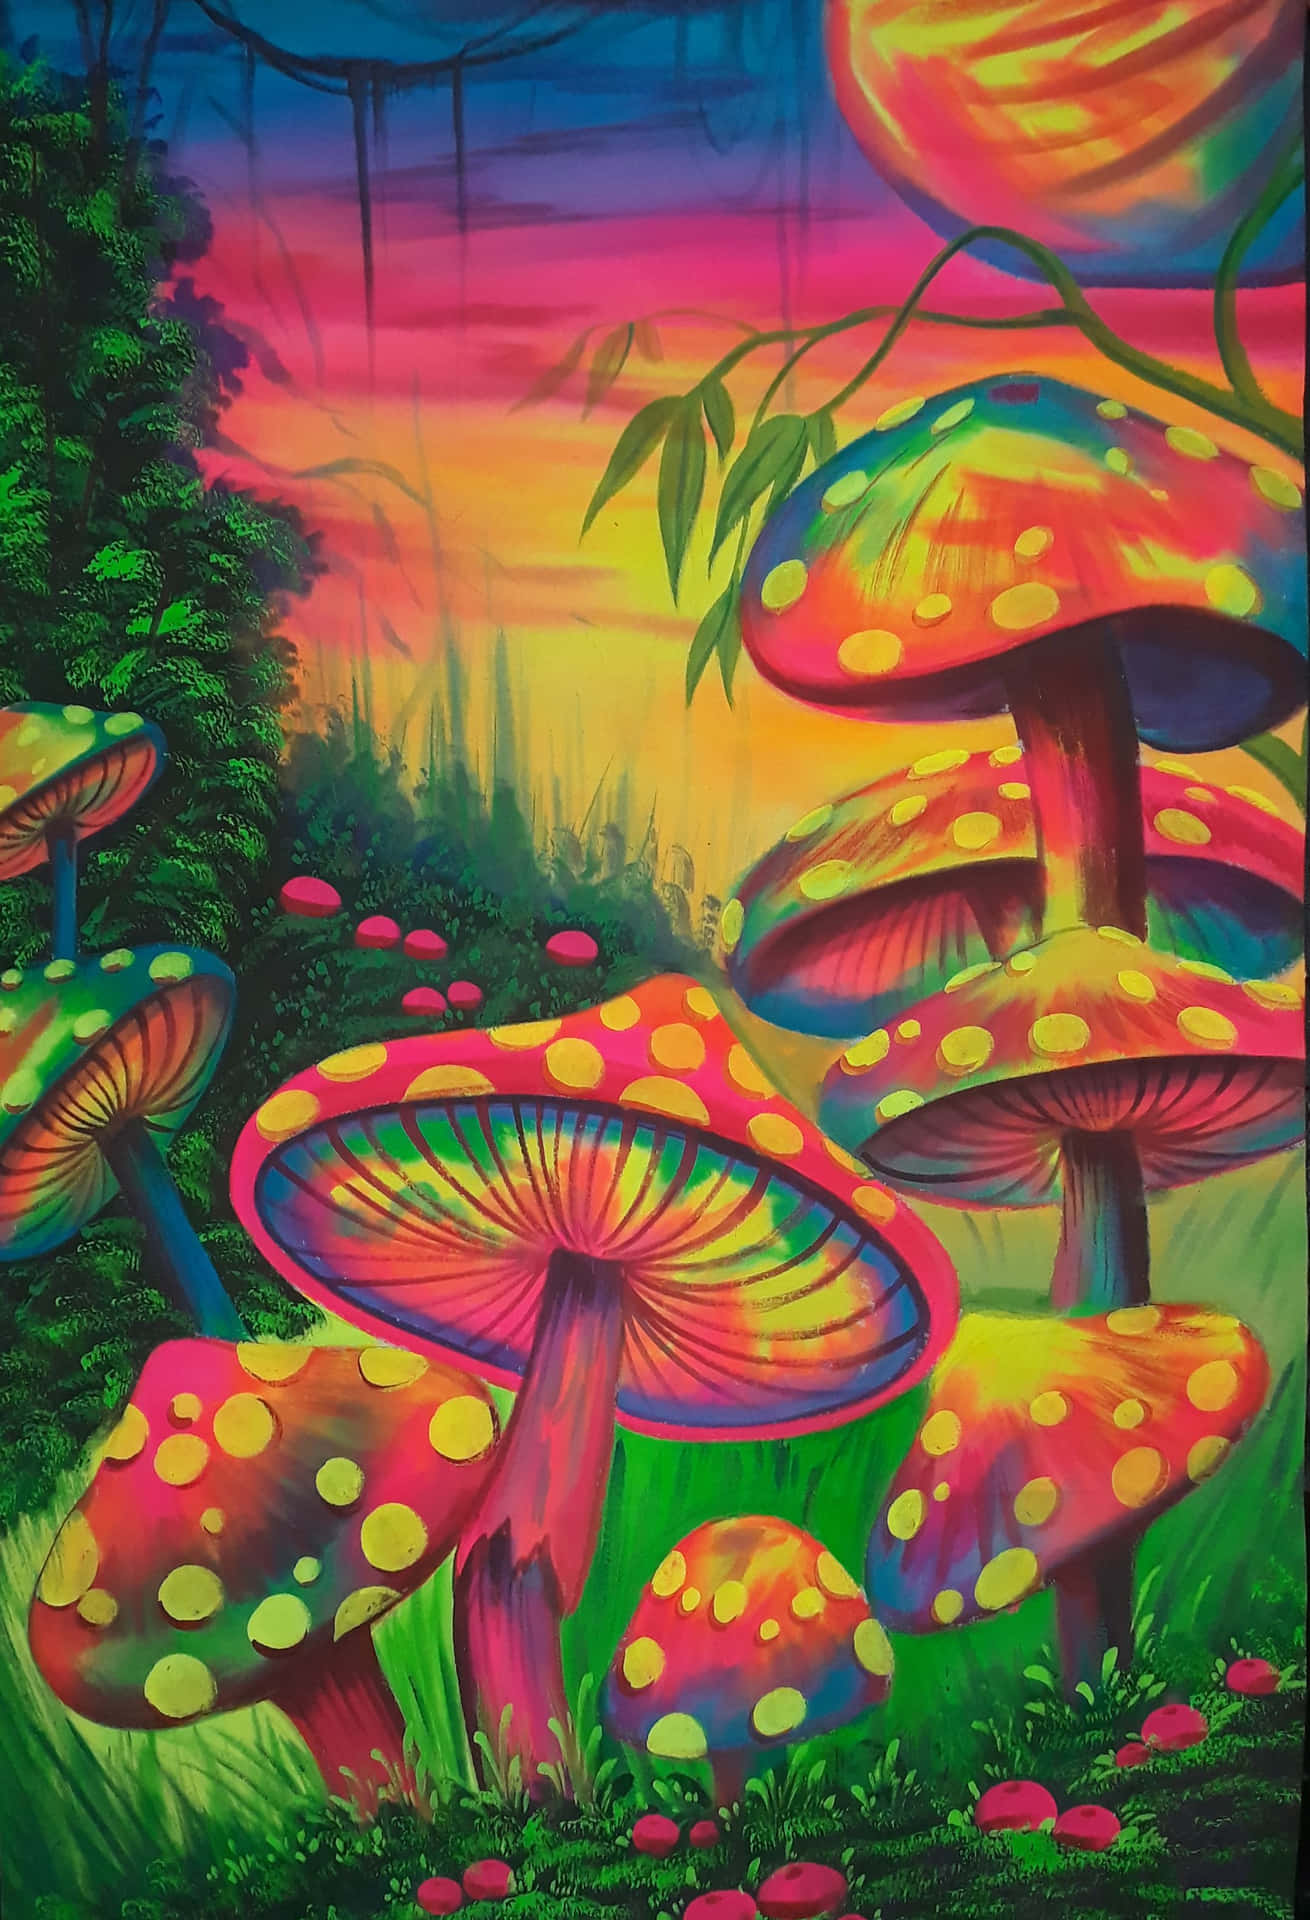 Adorable Kawaii Mushroom in a Cute Forest Setting Wallpaper